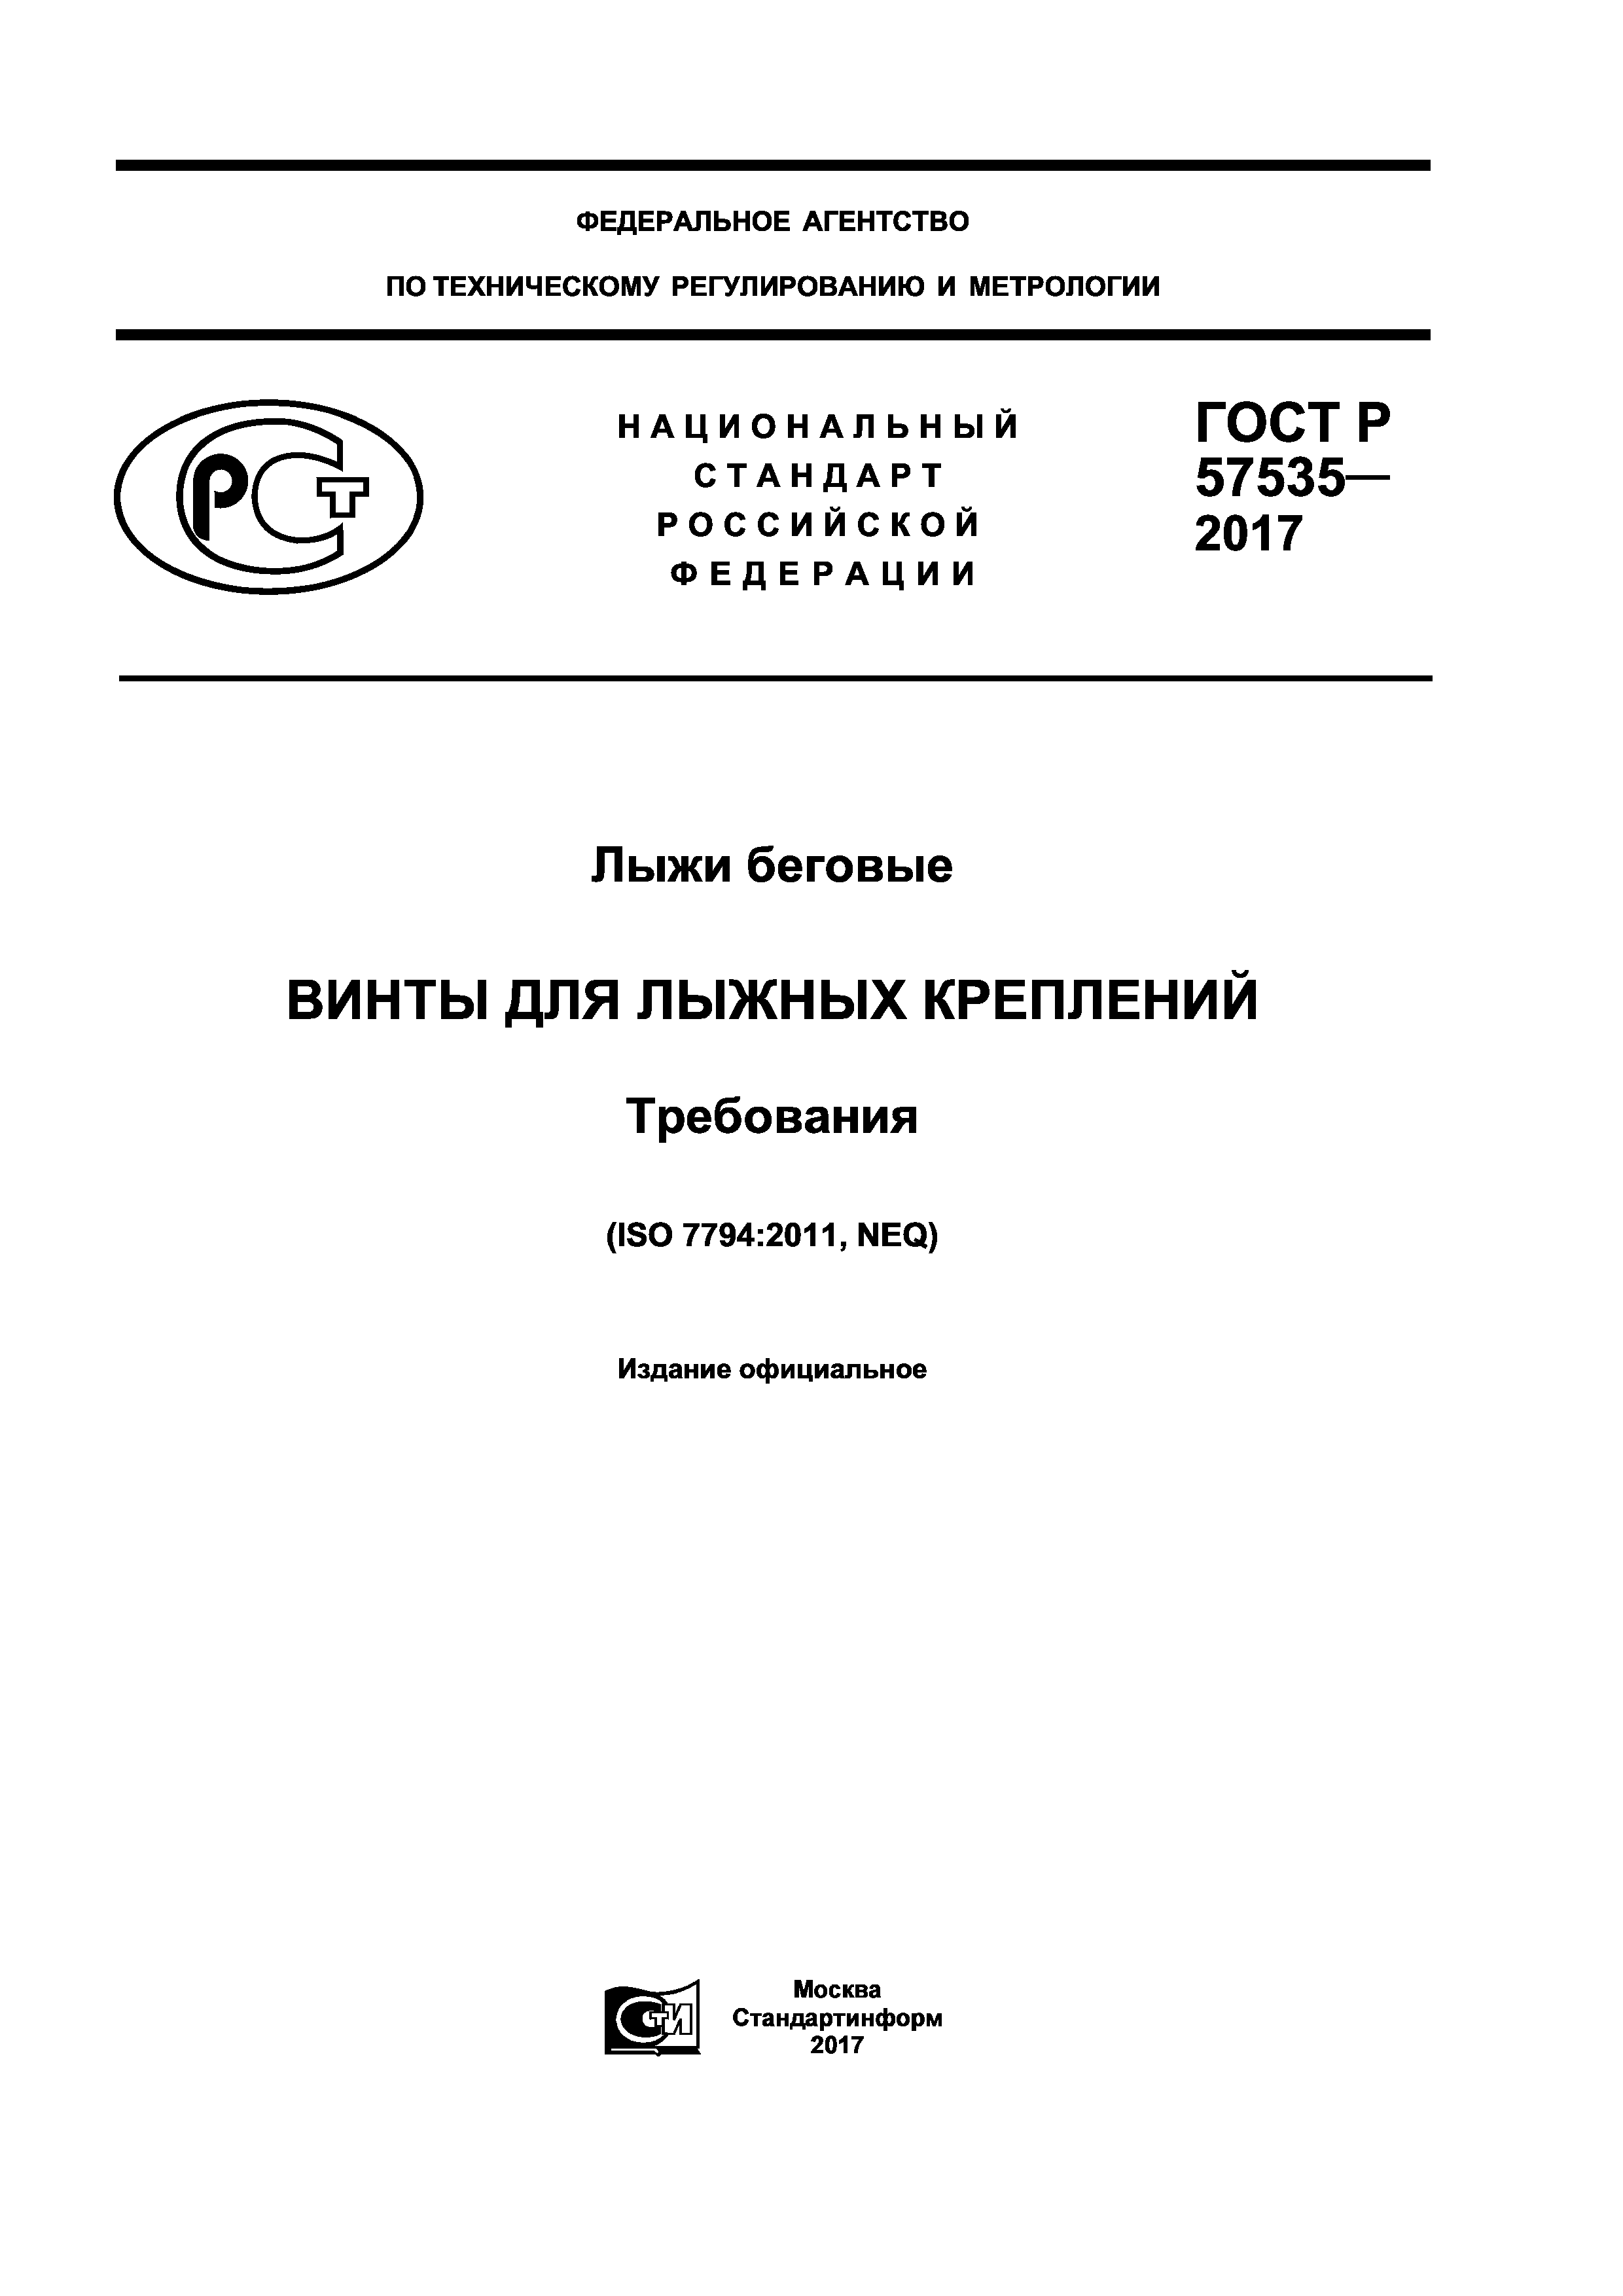 ГОСТ Р 57535-2017